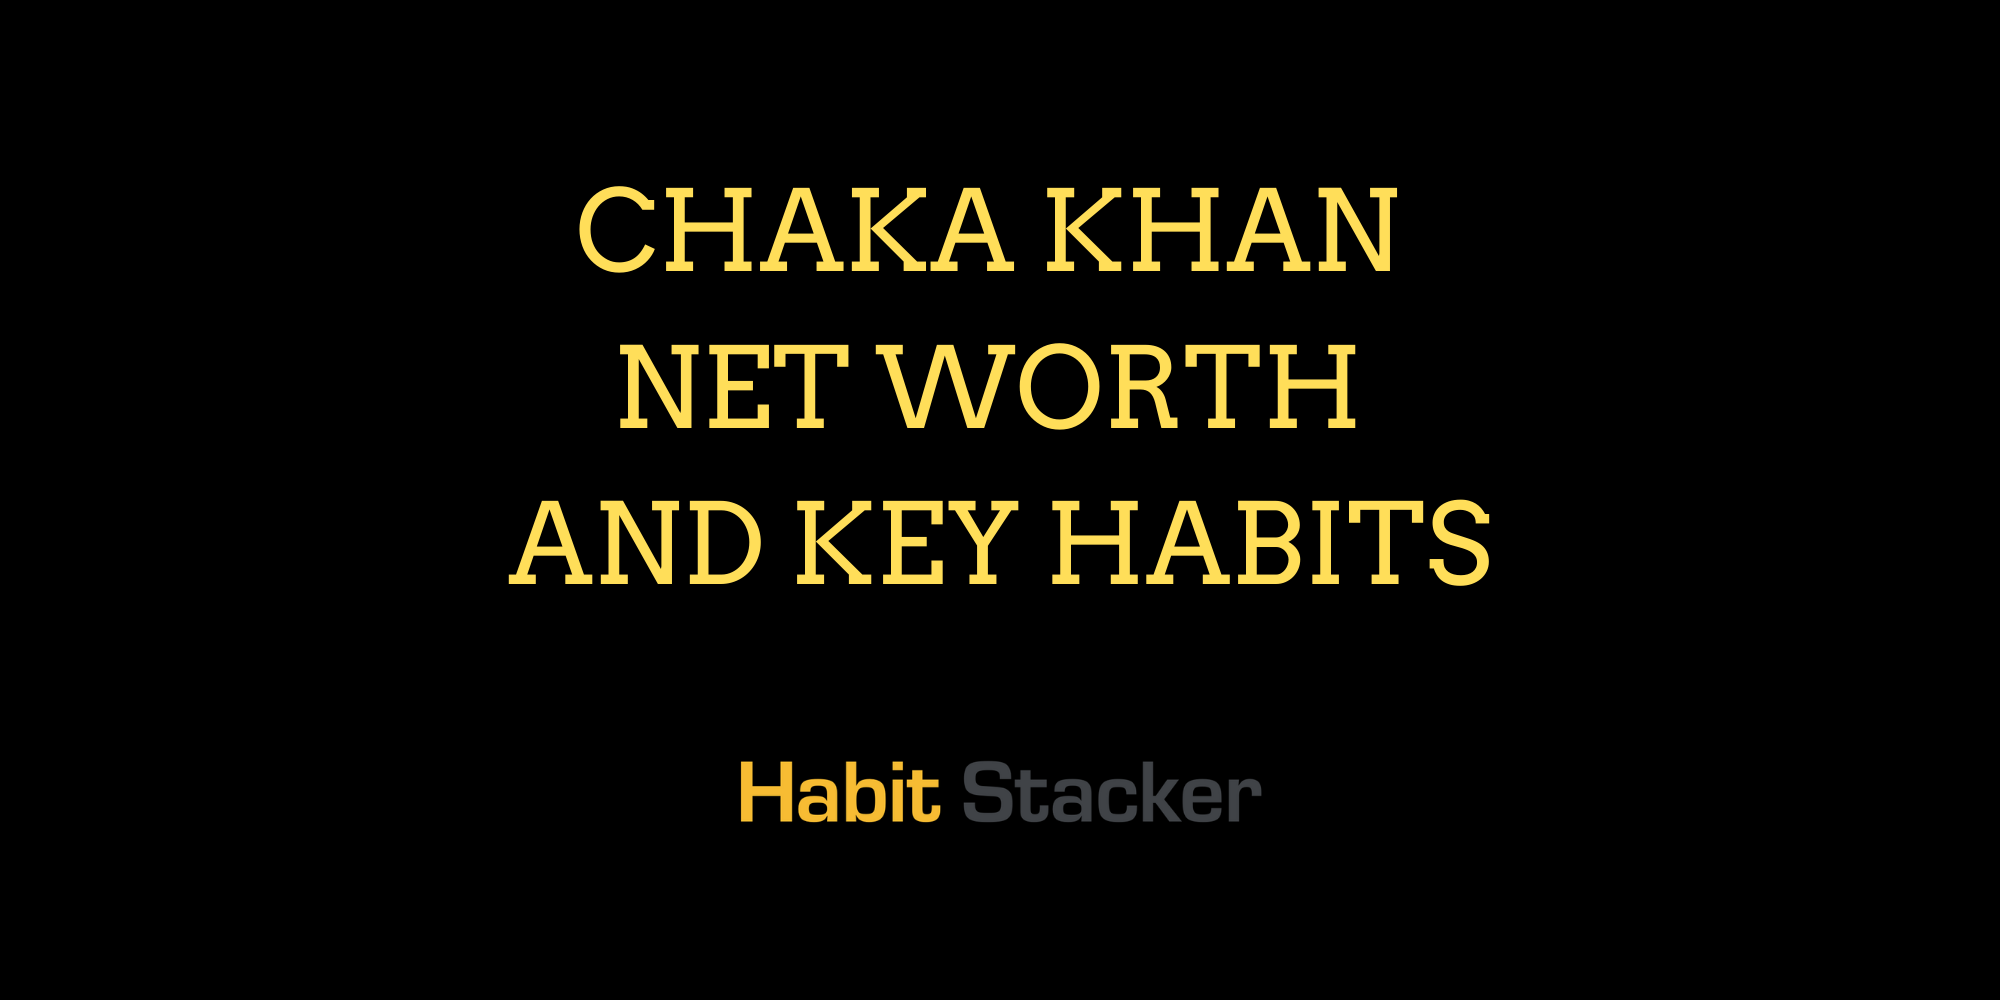 Chaka Khan Net Worth and Key Habits